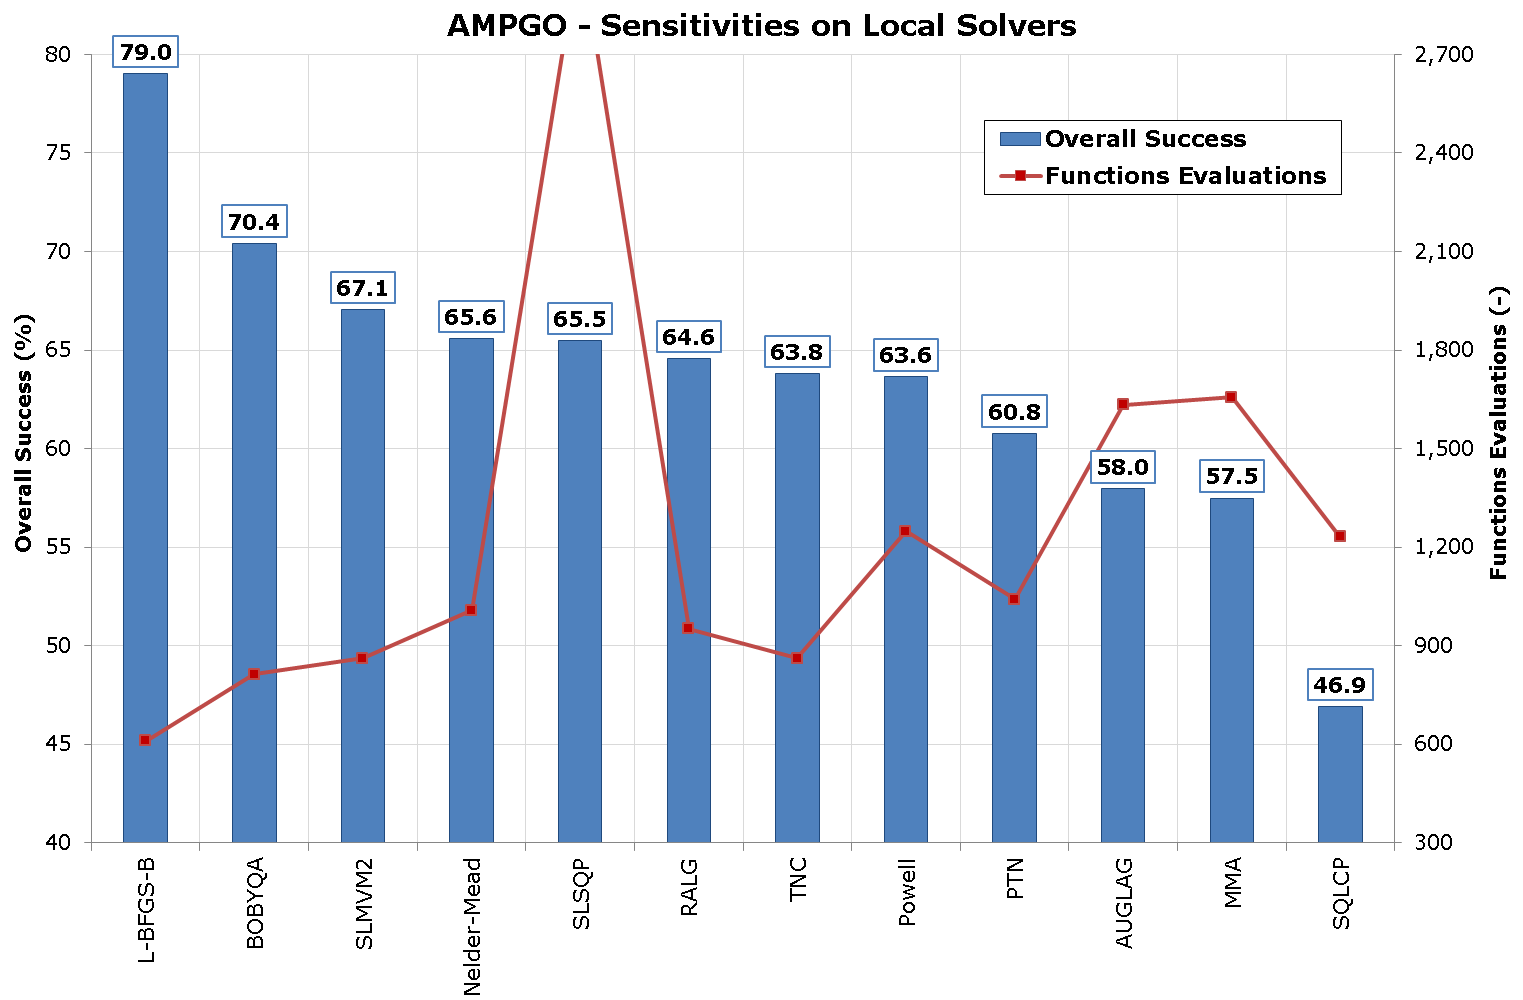 AMPGO local solvers sensitivity